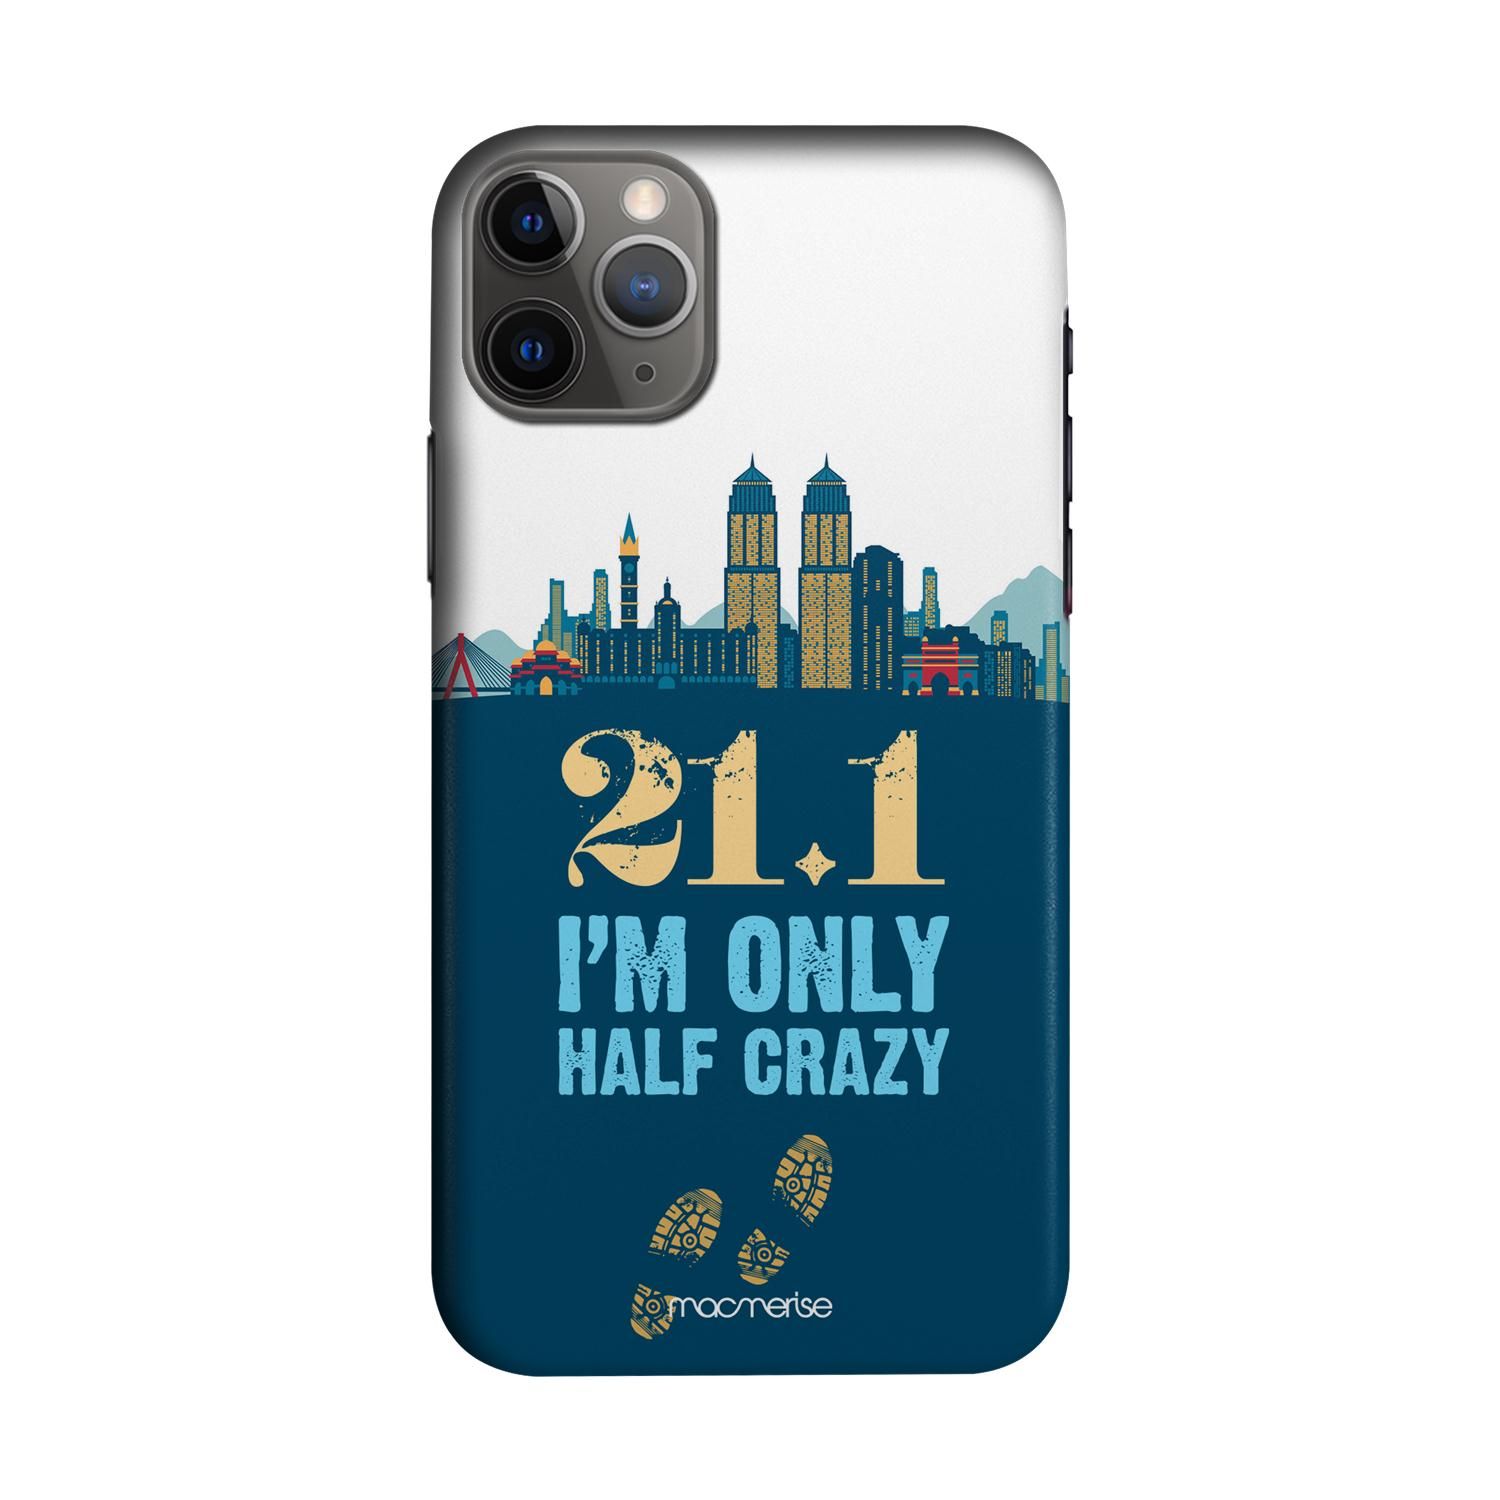 Buy Half Crazy - Sleek Phone Case for iPhone 11 Pro Max Online